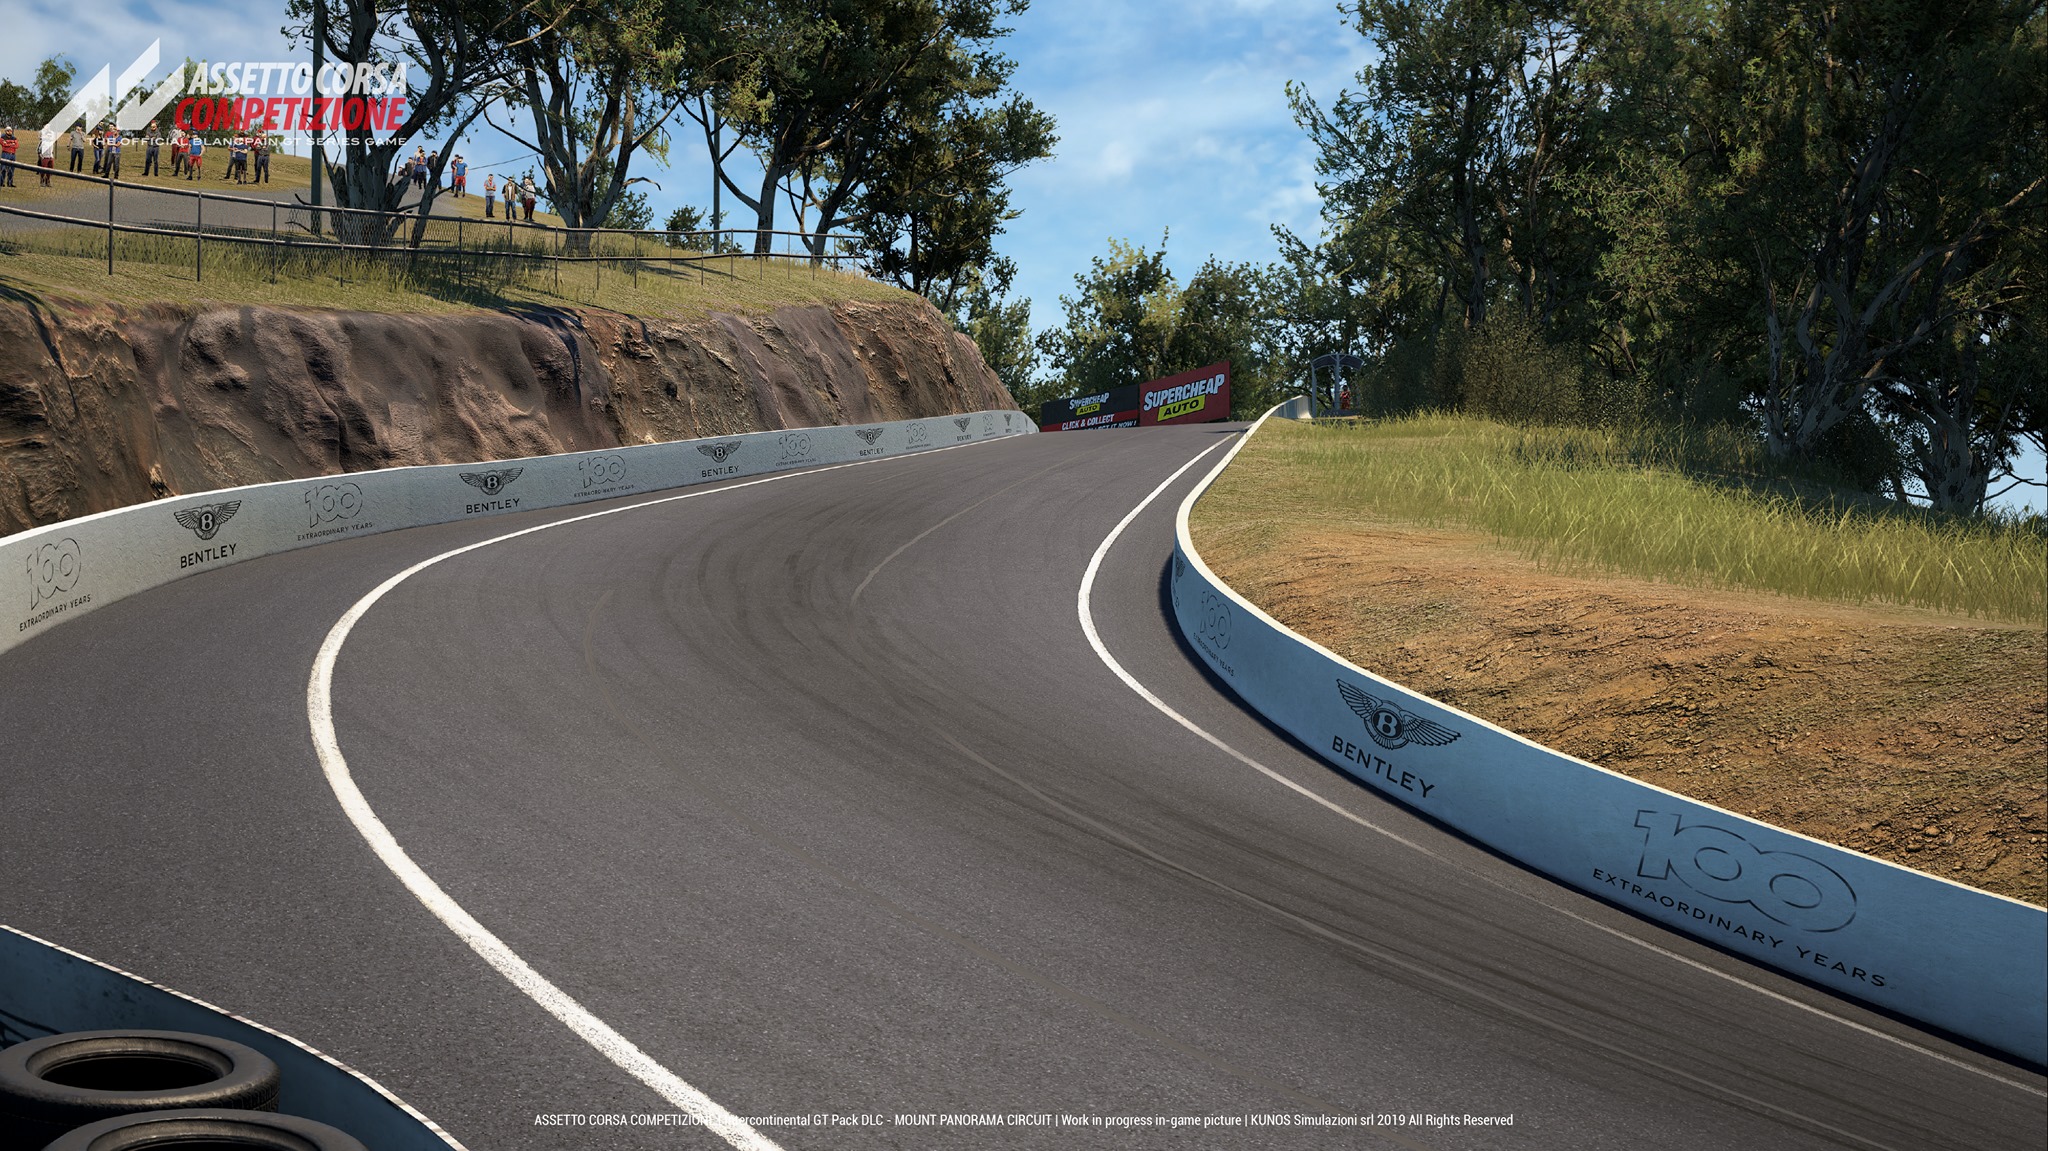 Assetto Corsa Competizione - Intercontinental GT Pack diumumkan di TGS 2019; Detail dan Screenshot Pertama